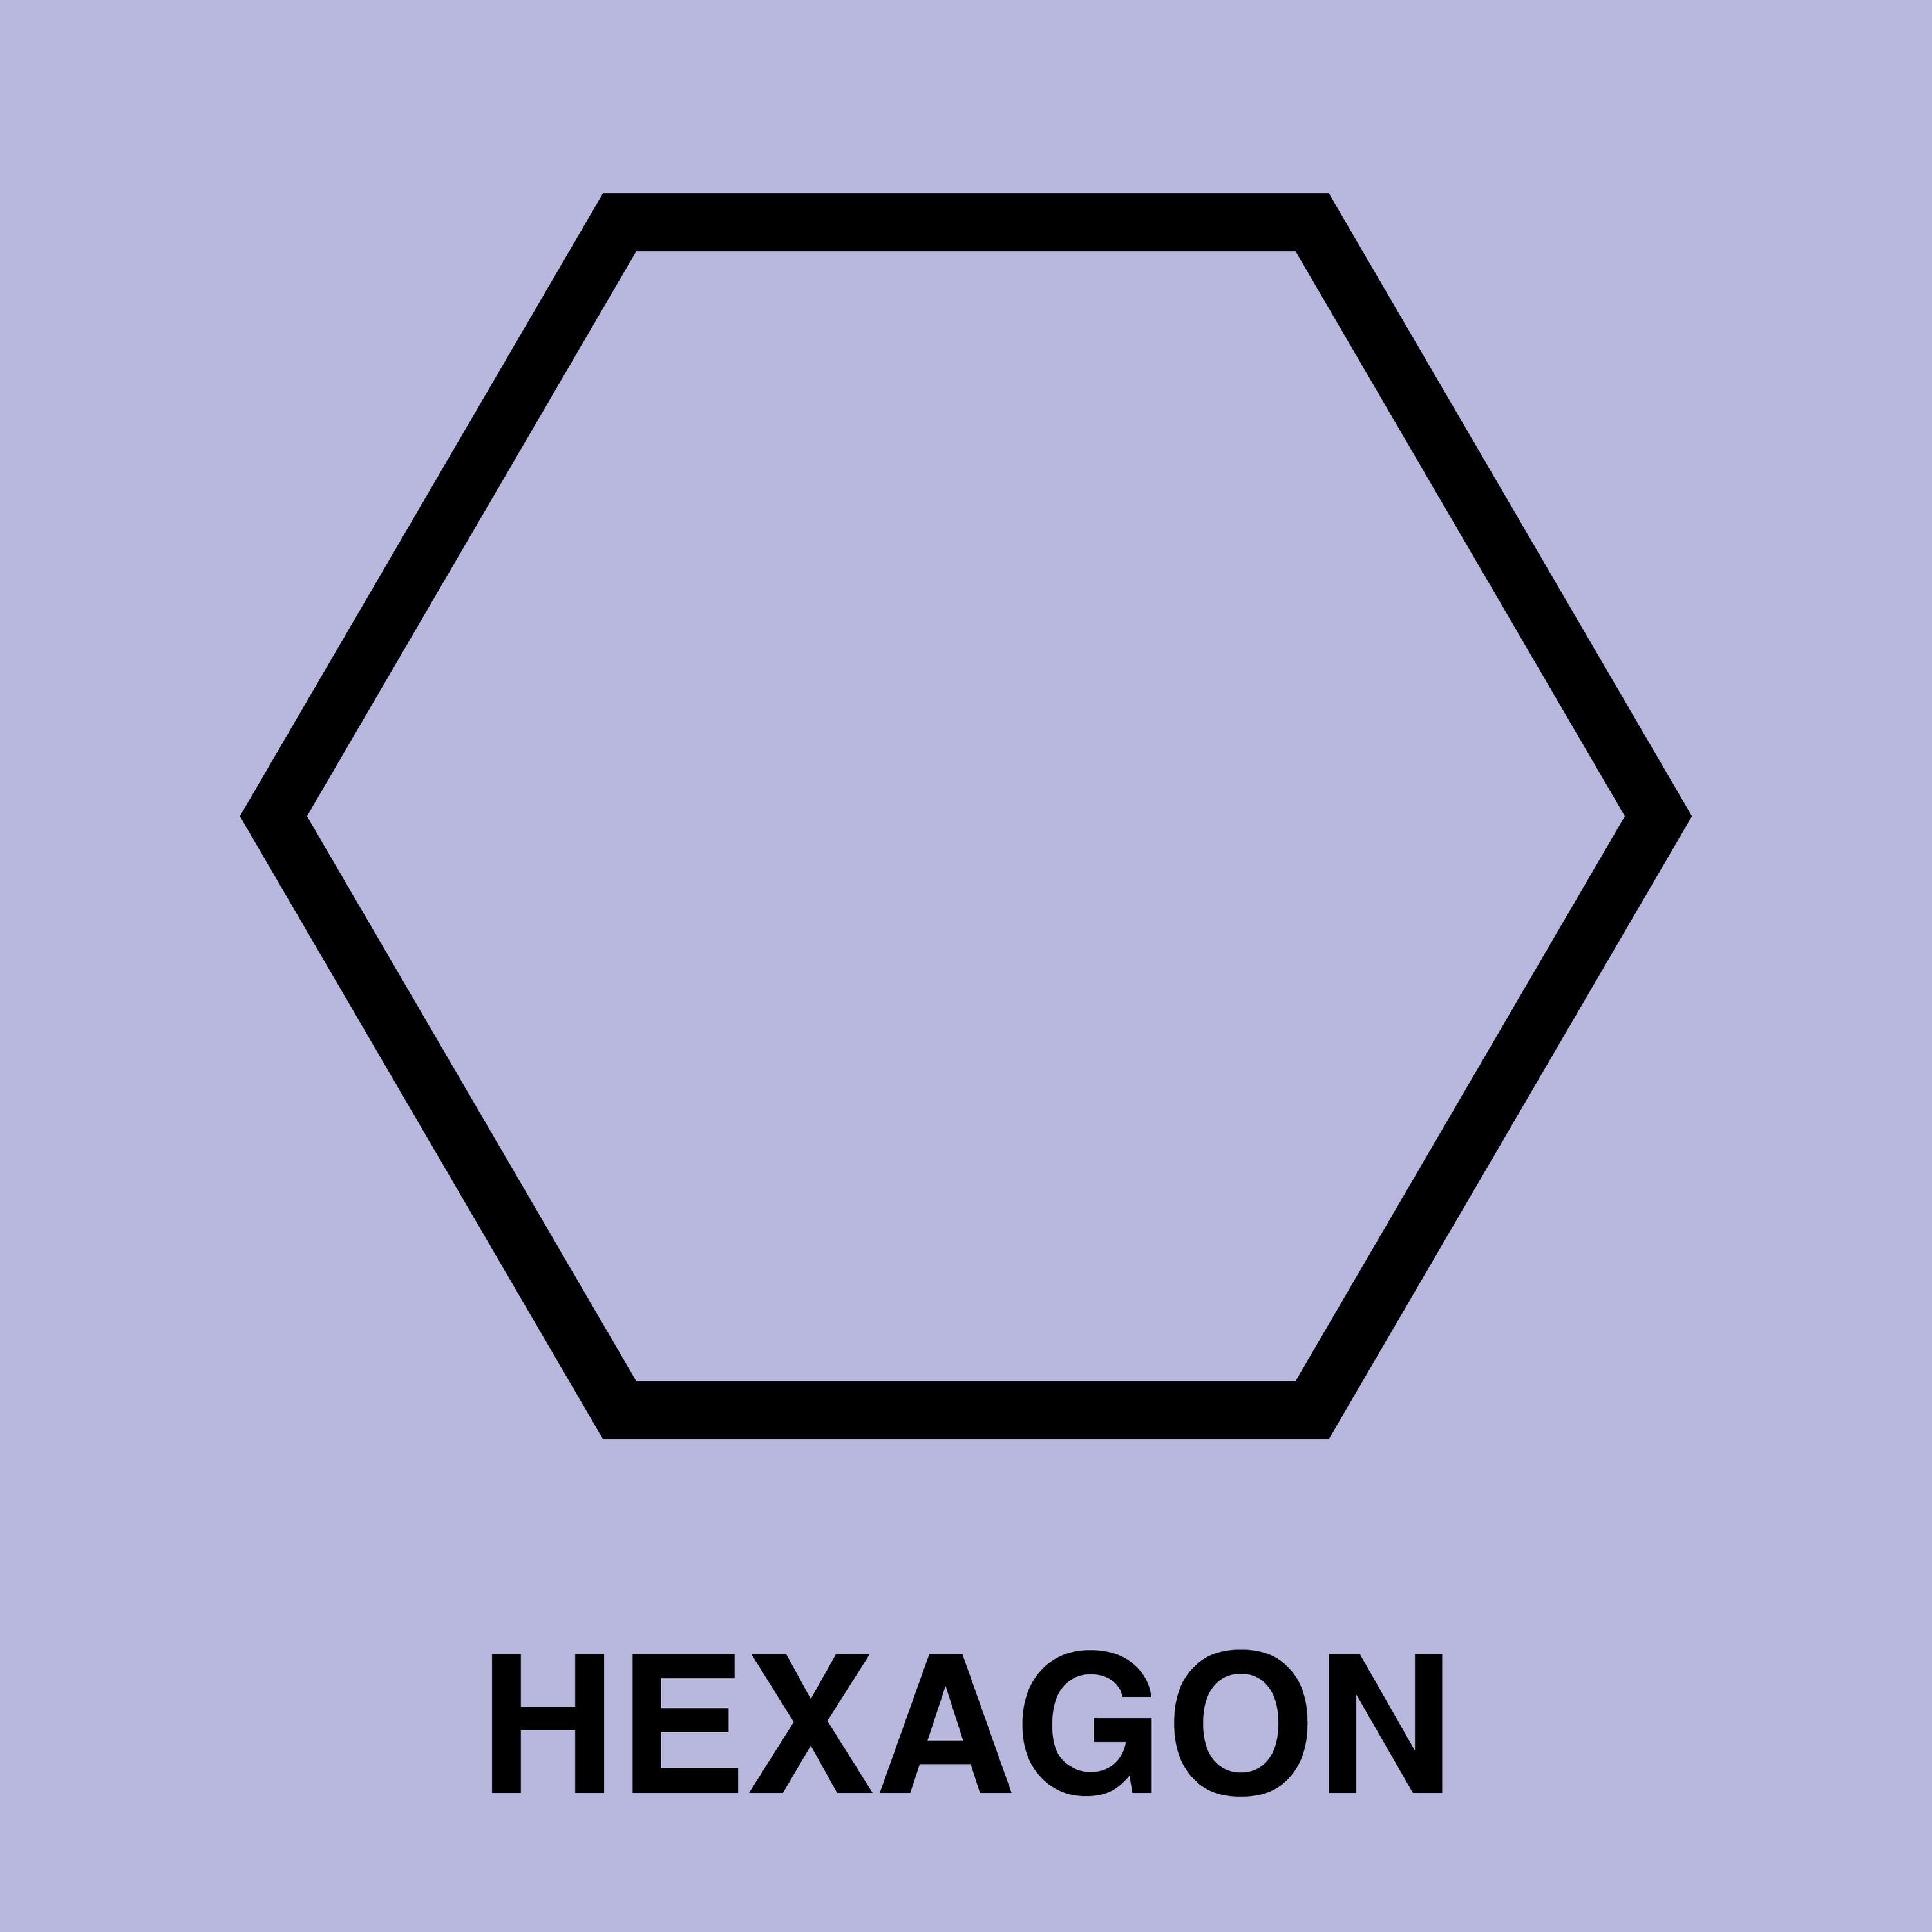 Hexagon Shape Images